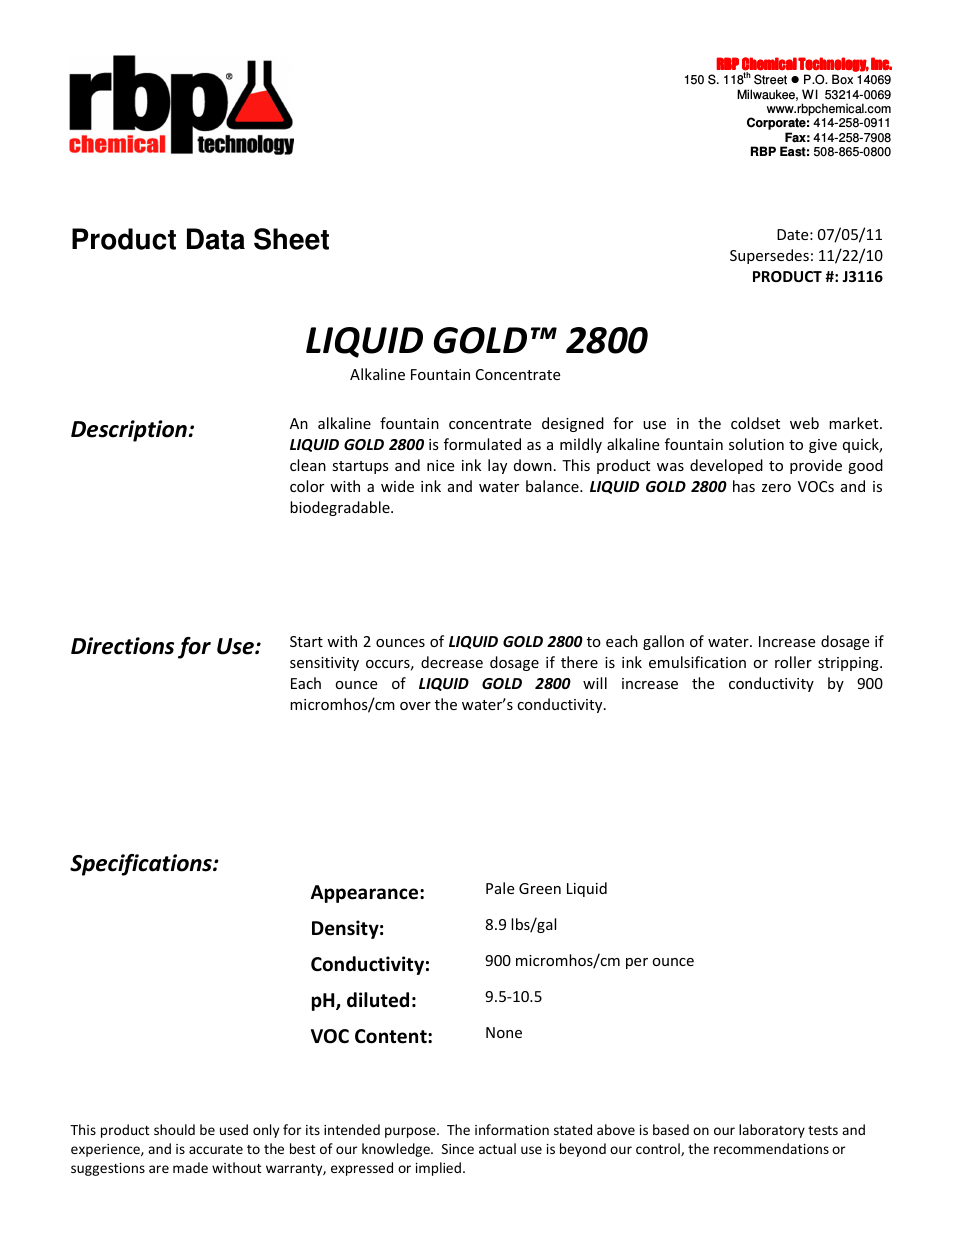 J3116 LIQUID GOLD 2800